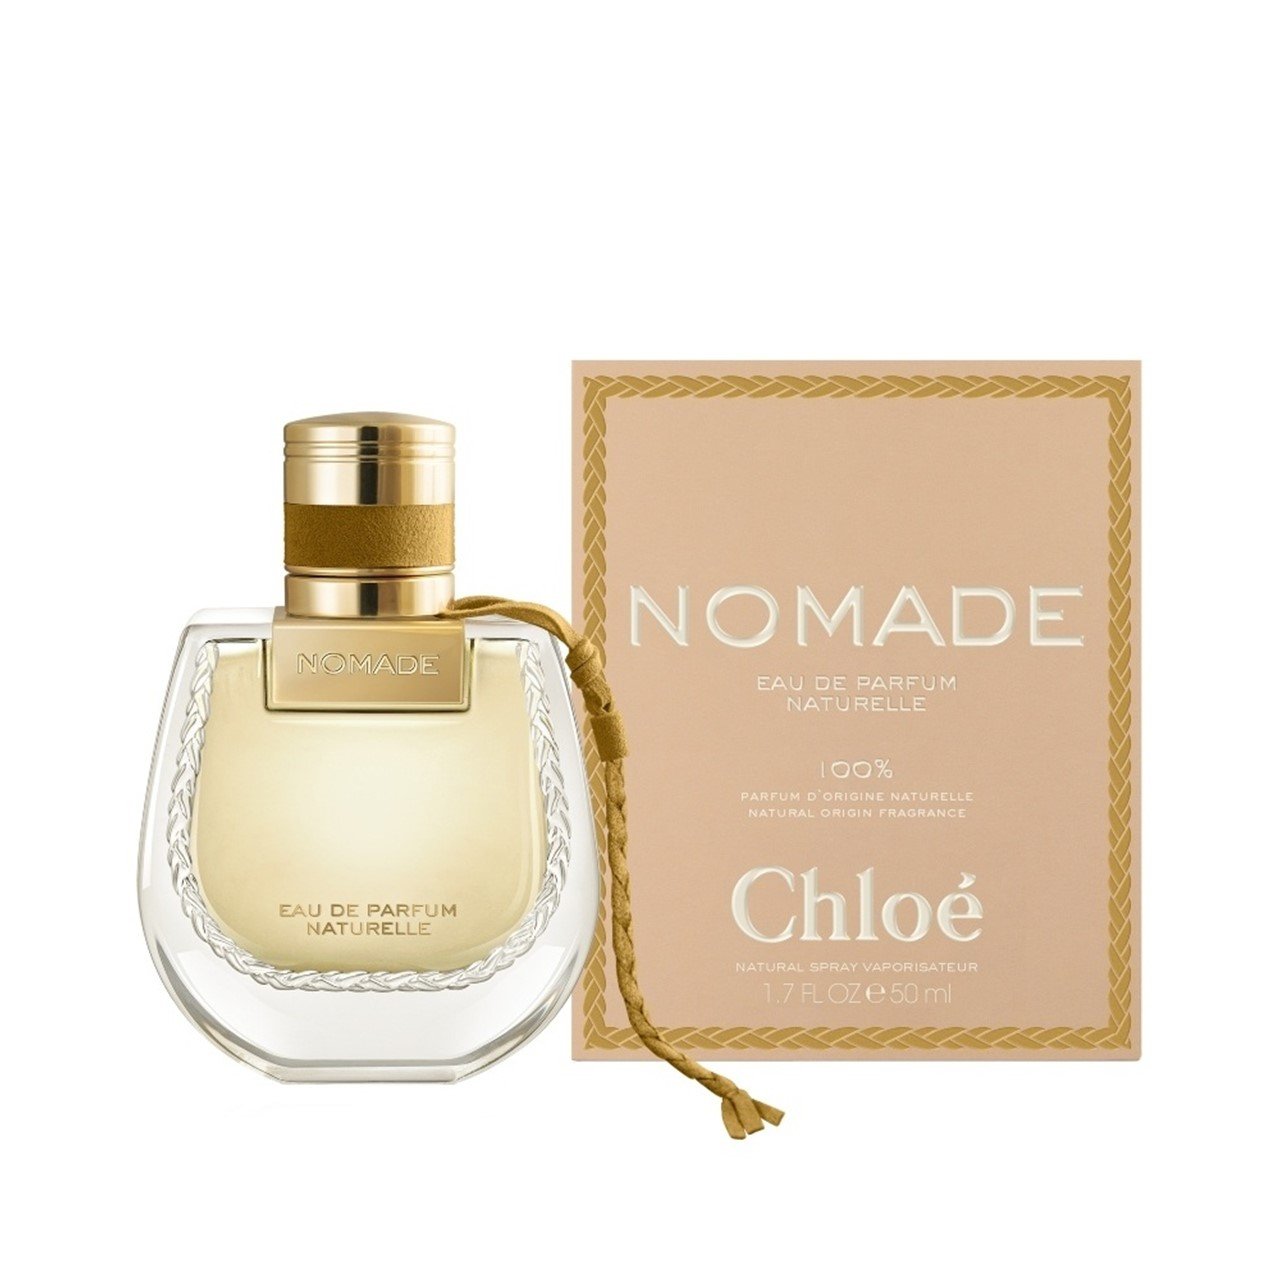 Buy Chloé Nomade Eau de · USA Naturelle 50ml Parfum